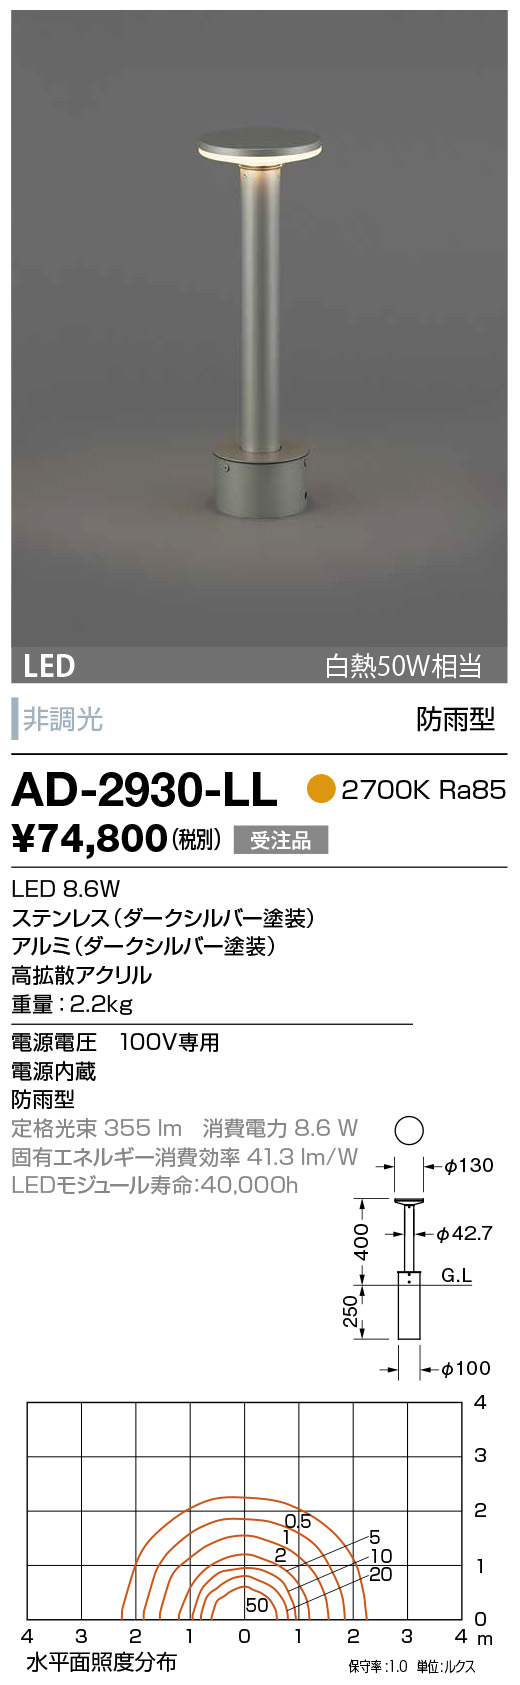 AD-2930-LL(山田照明) 商品詳細 ～ 照明器具・換気扇他、電設資材販売のブライト